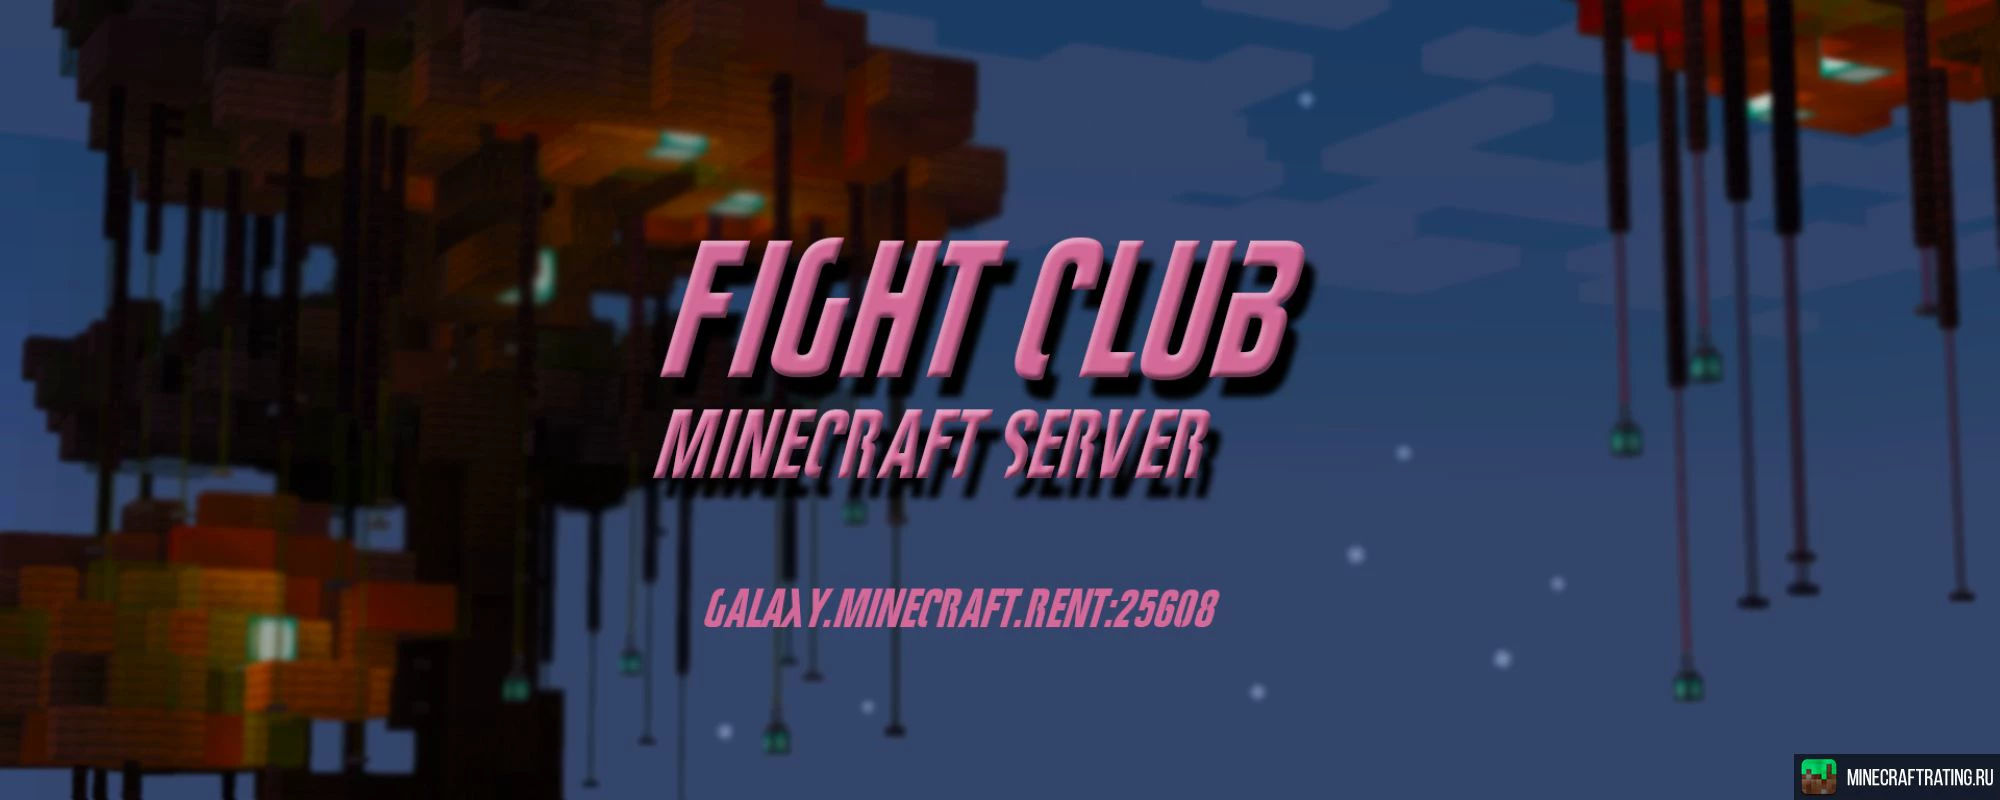 Скриншот сервера Fight-Club